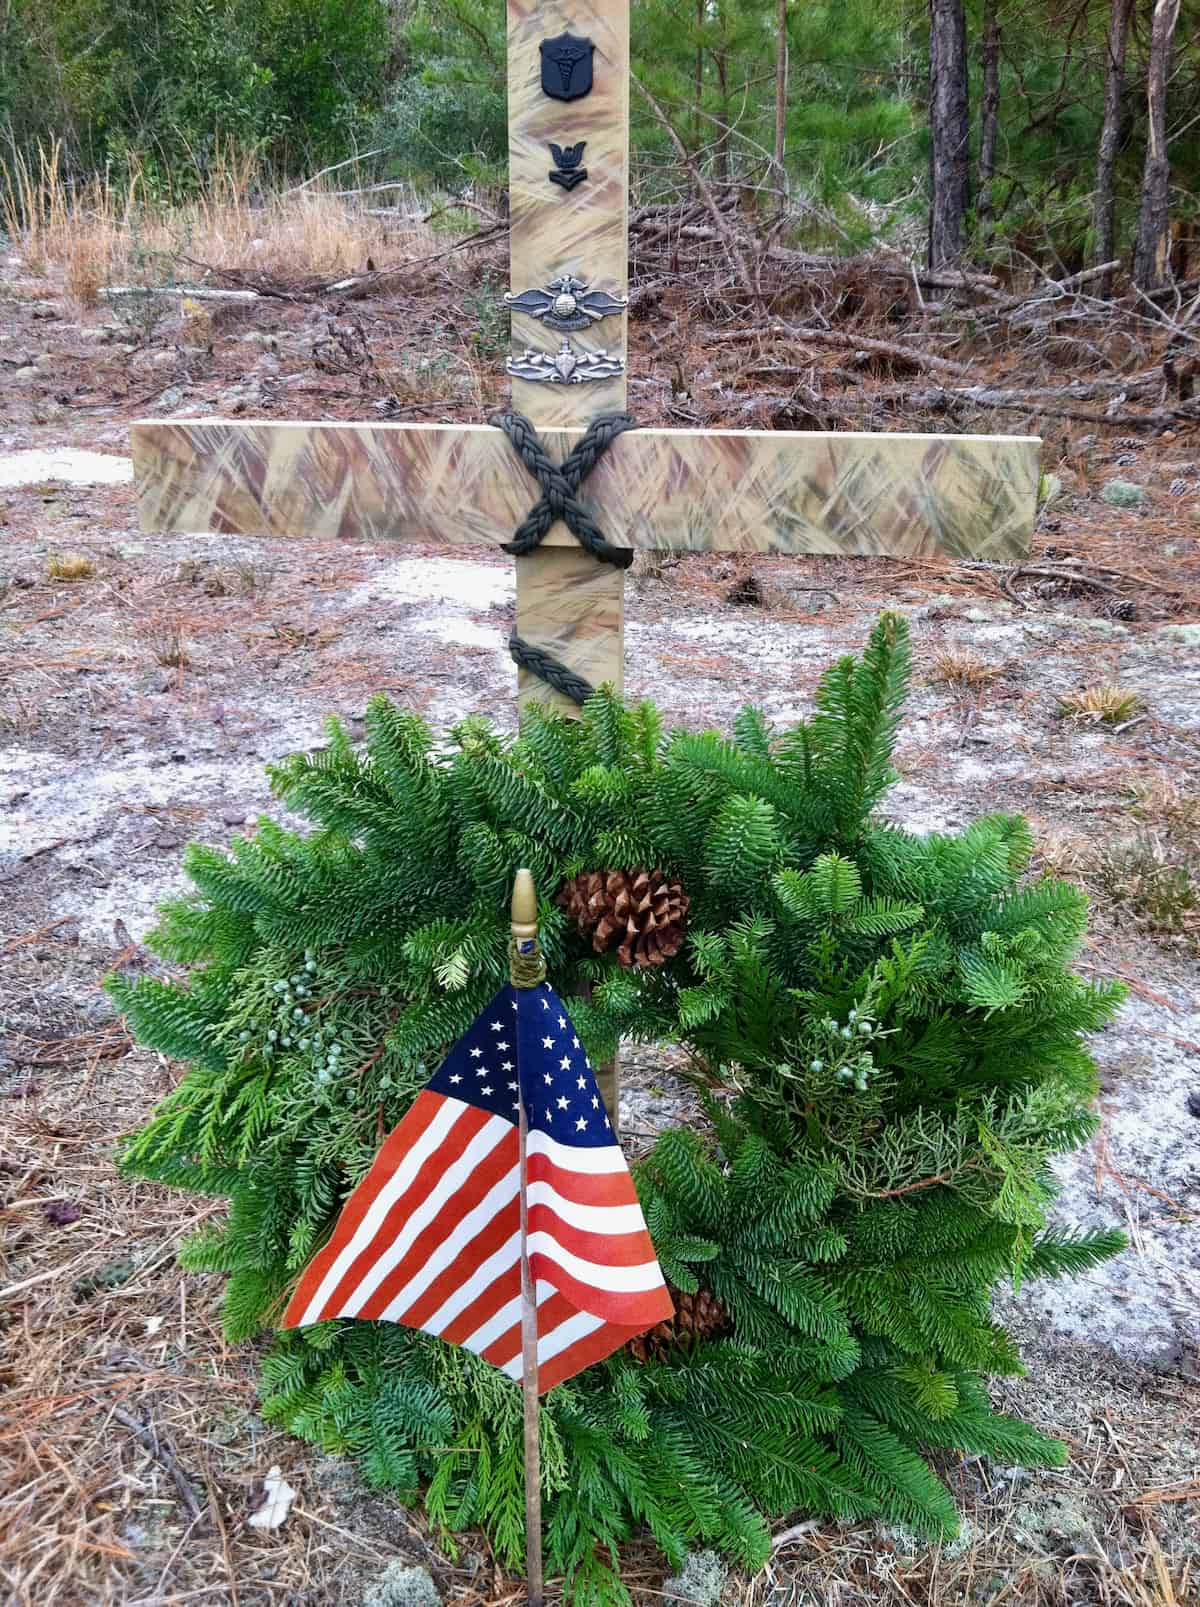 Roadside tribute of military cross, wreath and American flag.